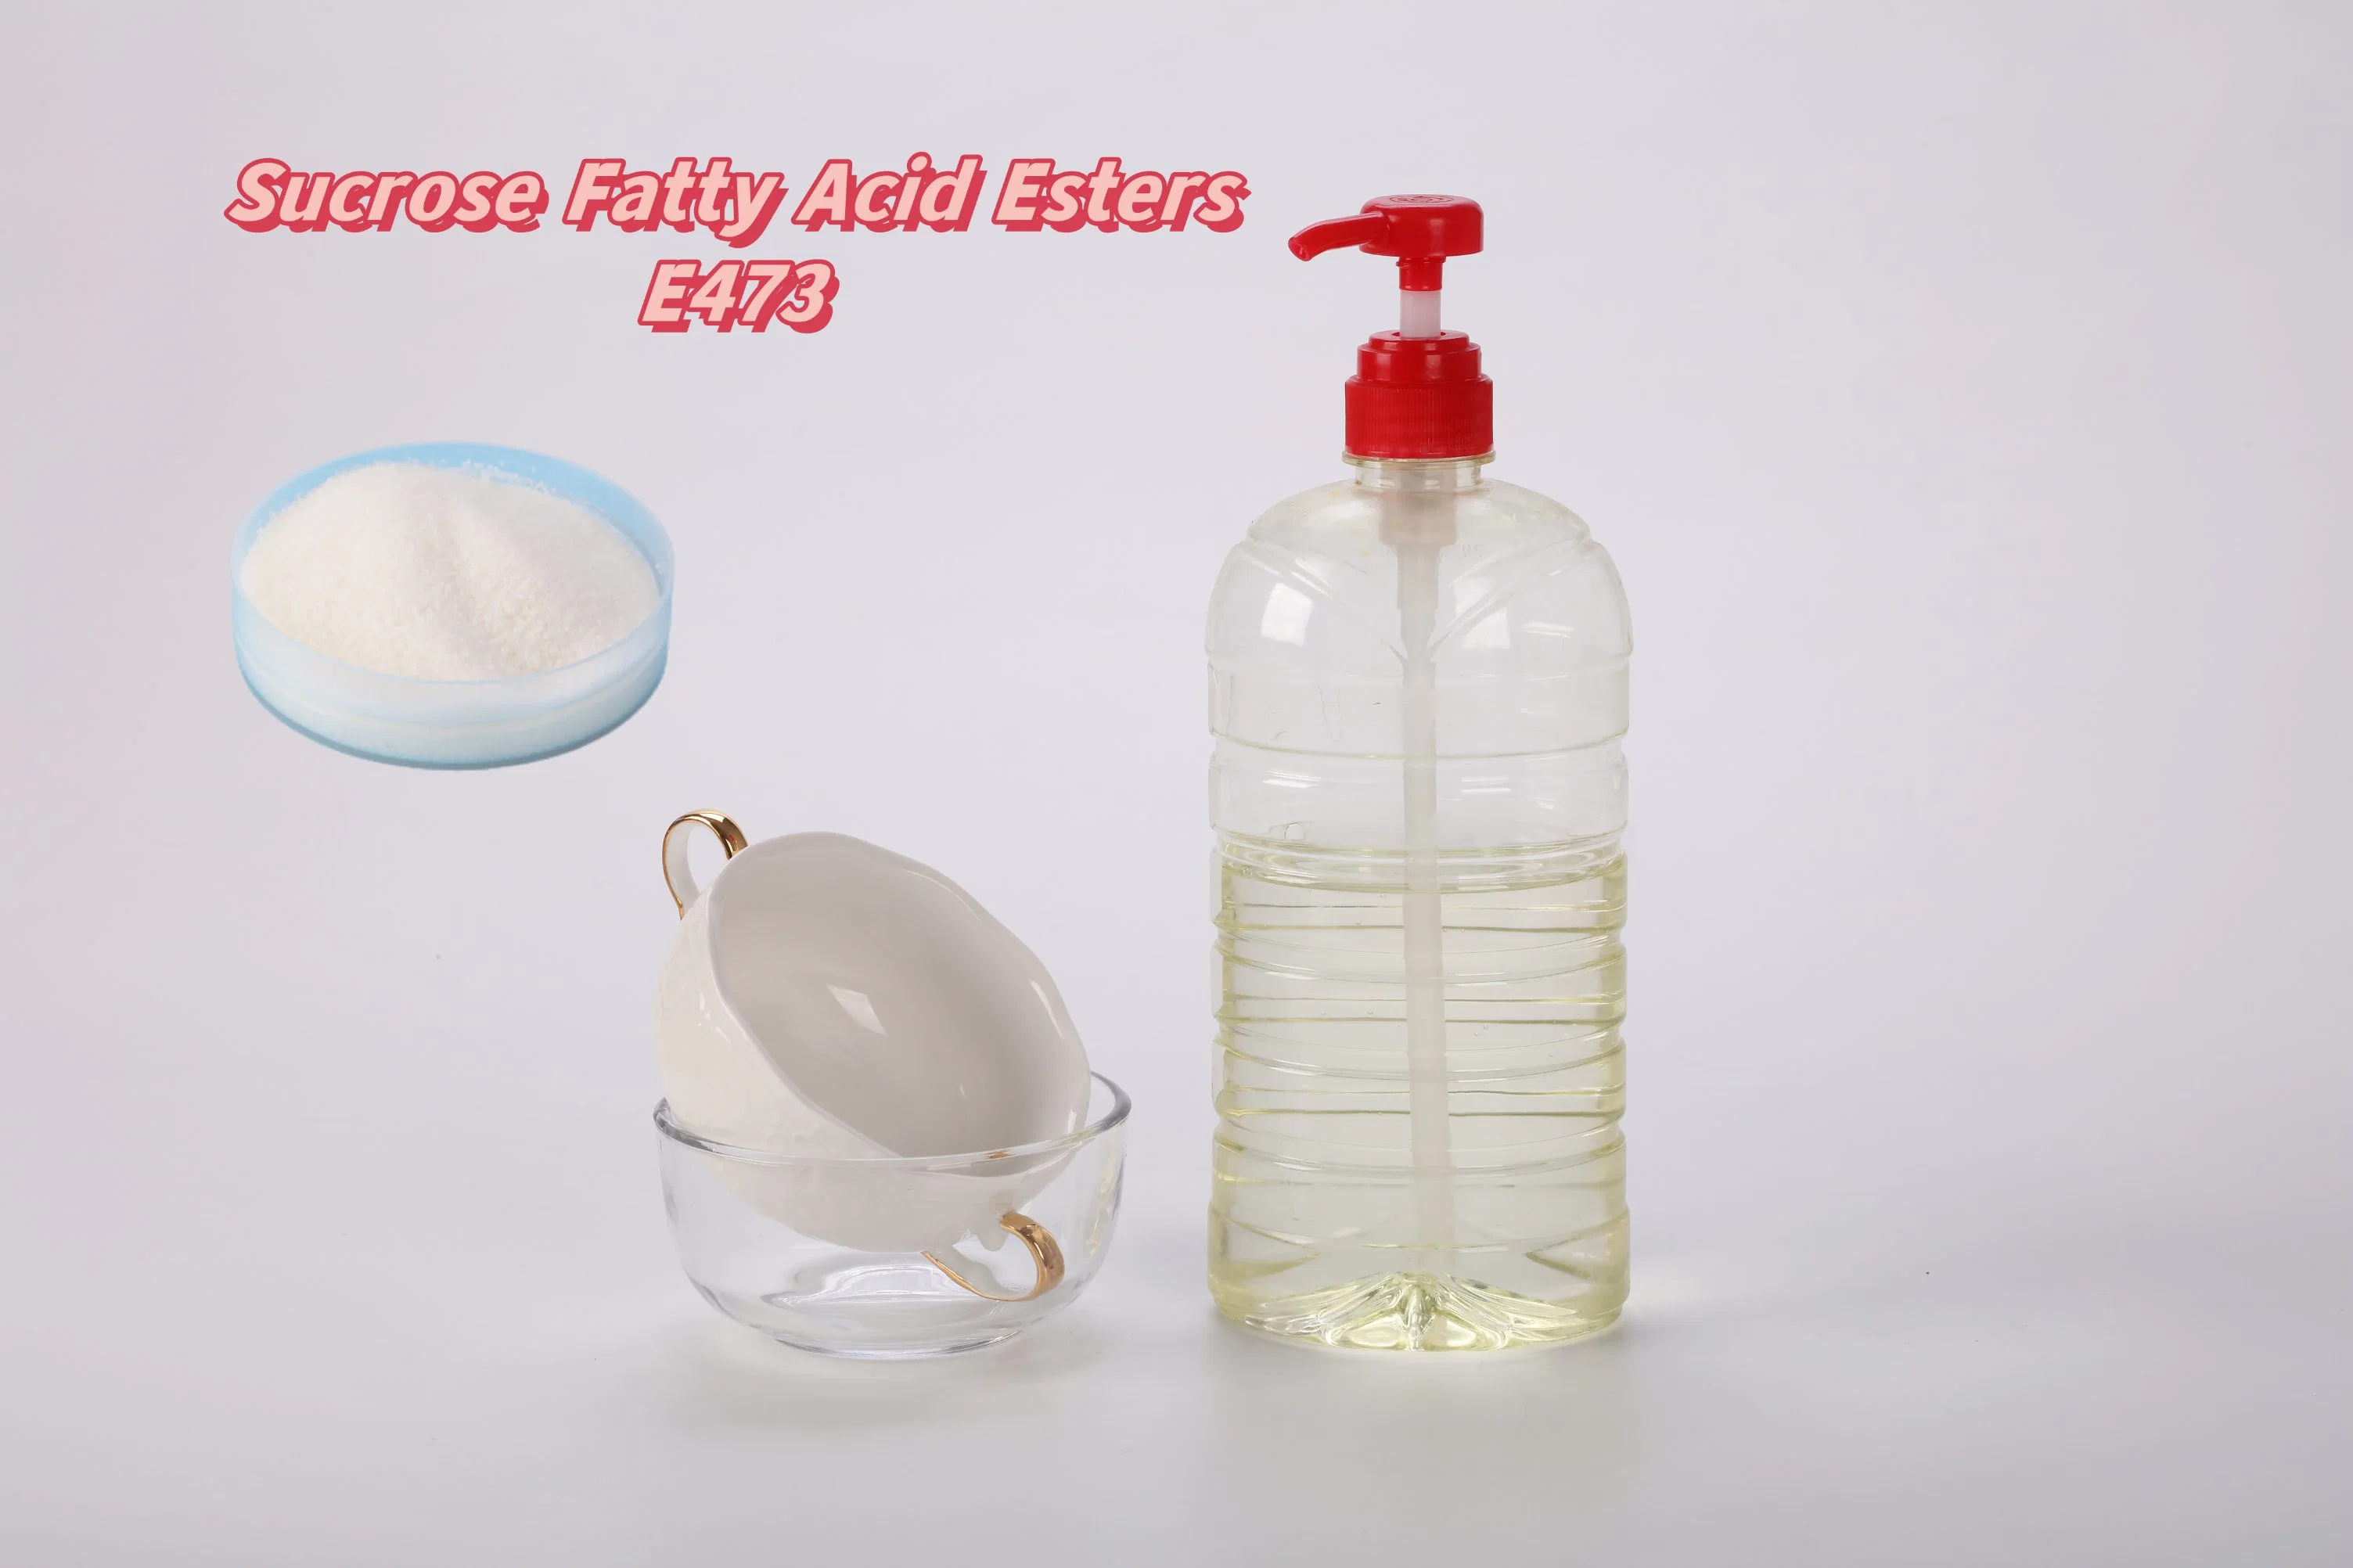 The Cheapest Price Emulsifier E473 Sucrose Fatty Acid Ester (SE-13)